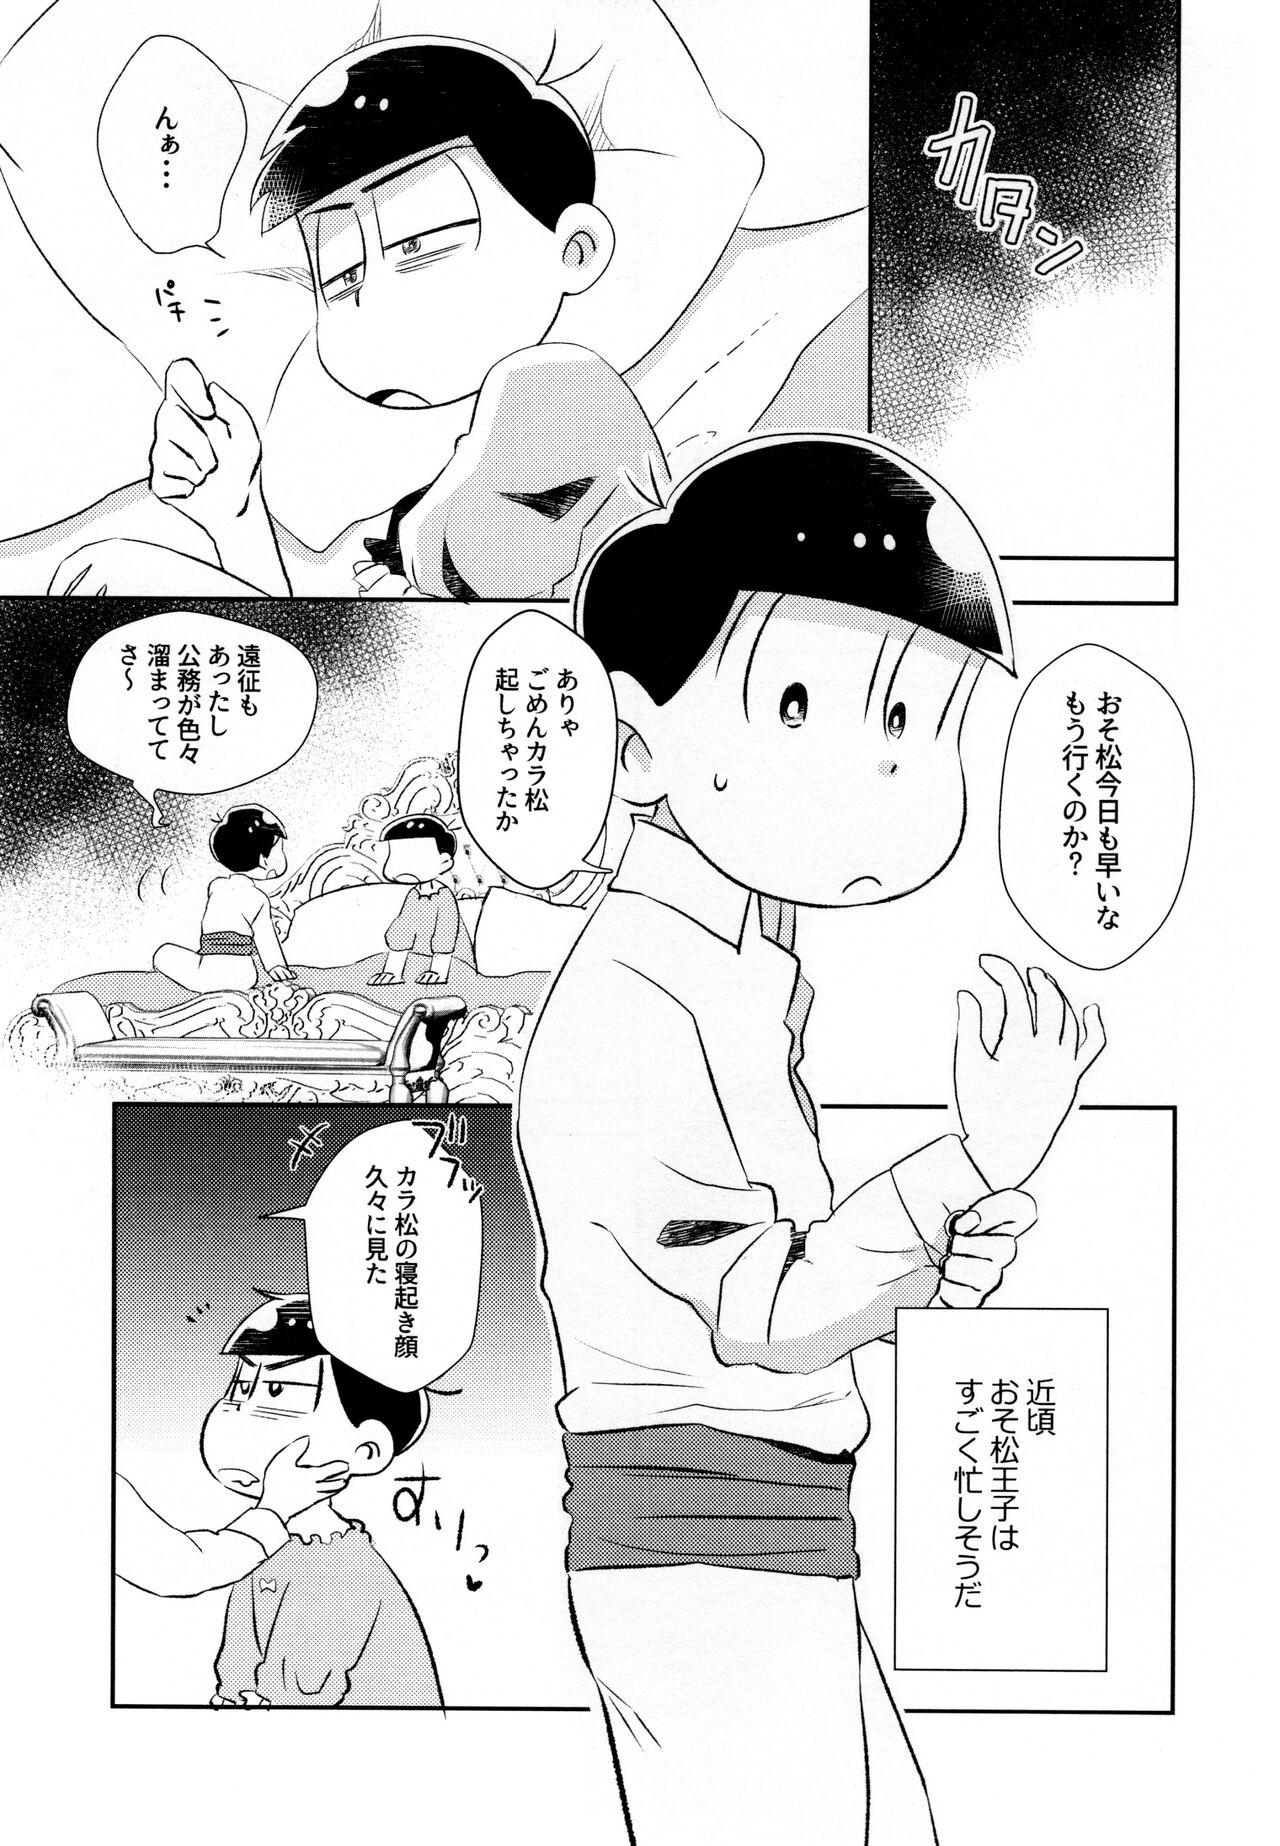 Nut Horo yoi Night - Osomatsu san Fishnet - Page 4